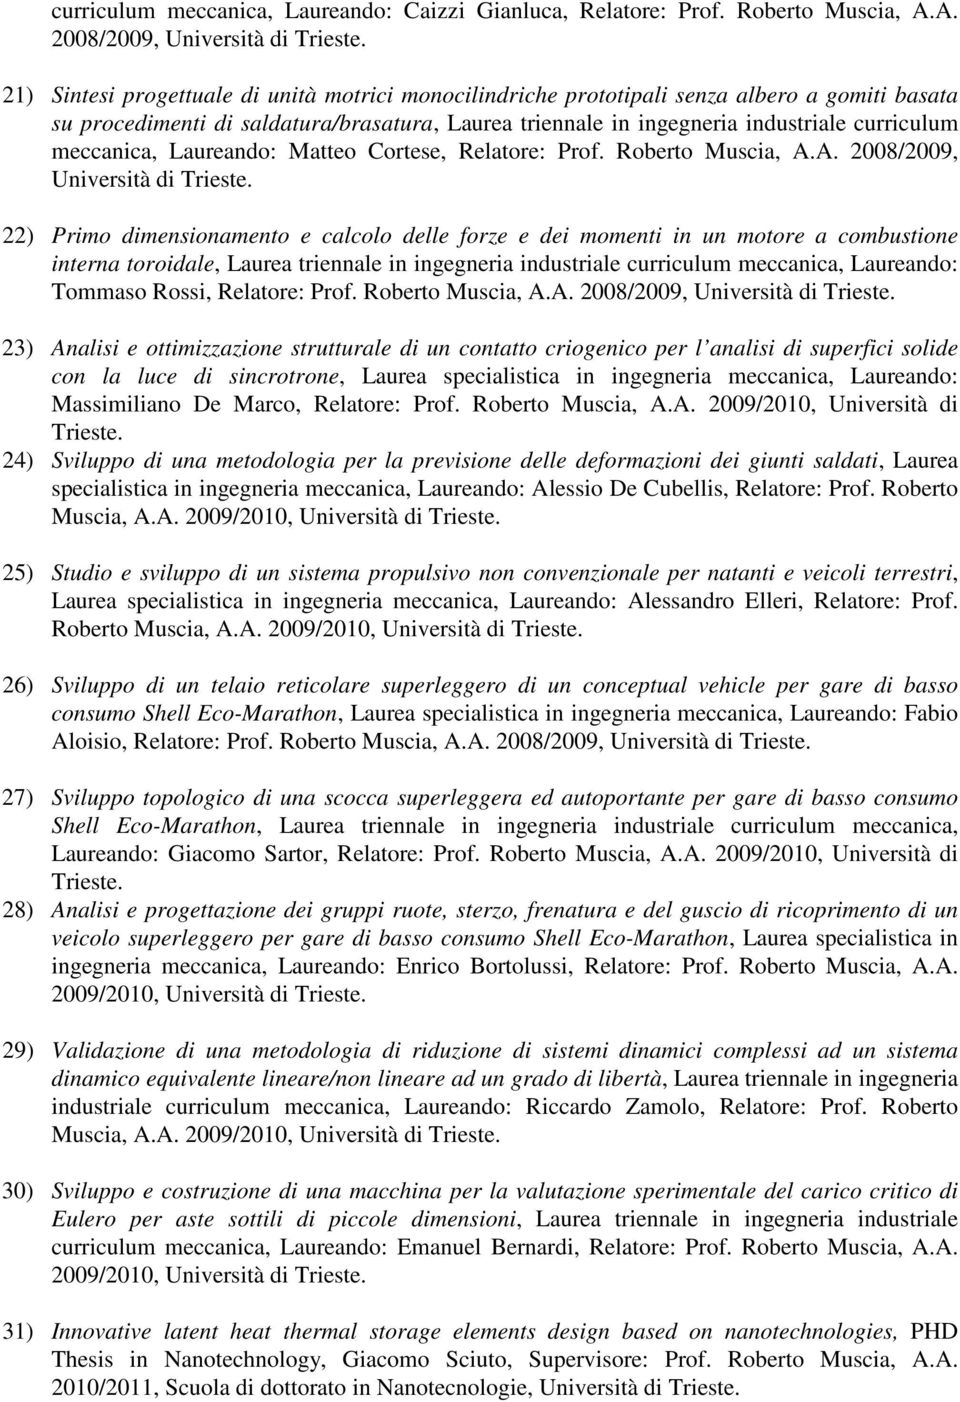 meccanica, Laureando: Matteo Cortese, Relatore: Prof. Roberto Muscia, A.A. 2008/2009, Università di Trieste.